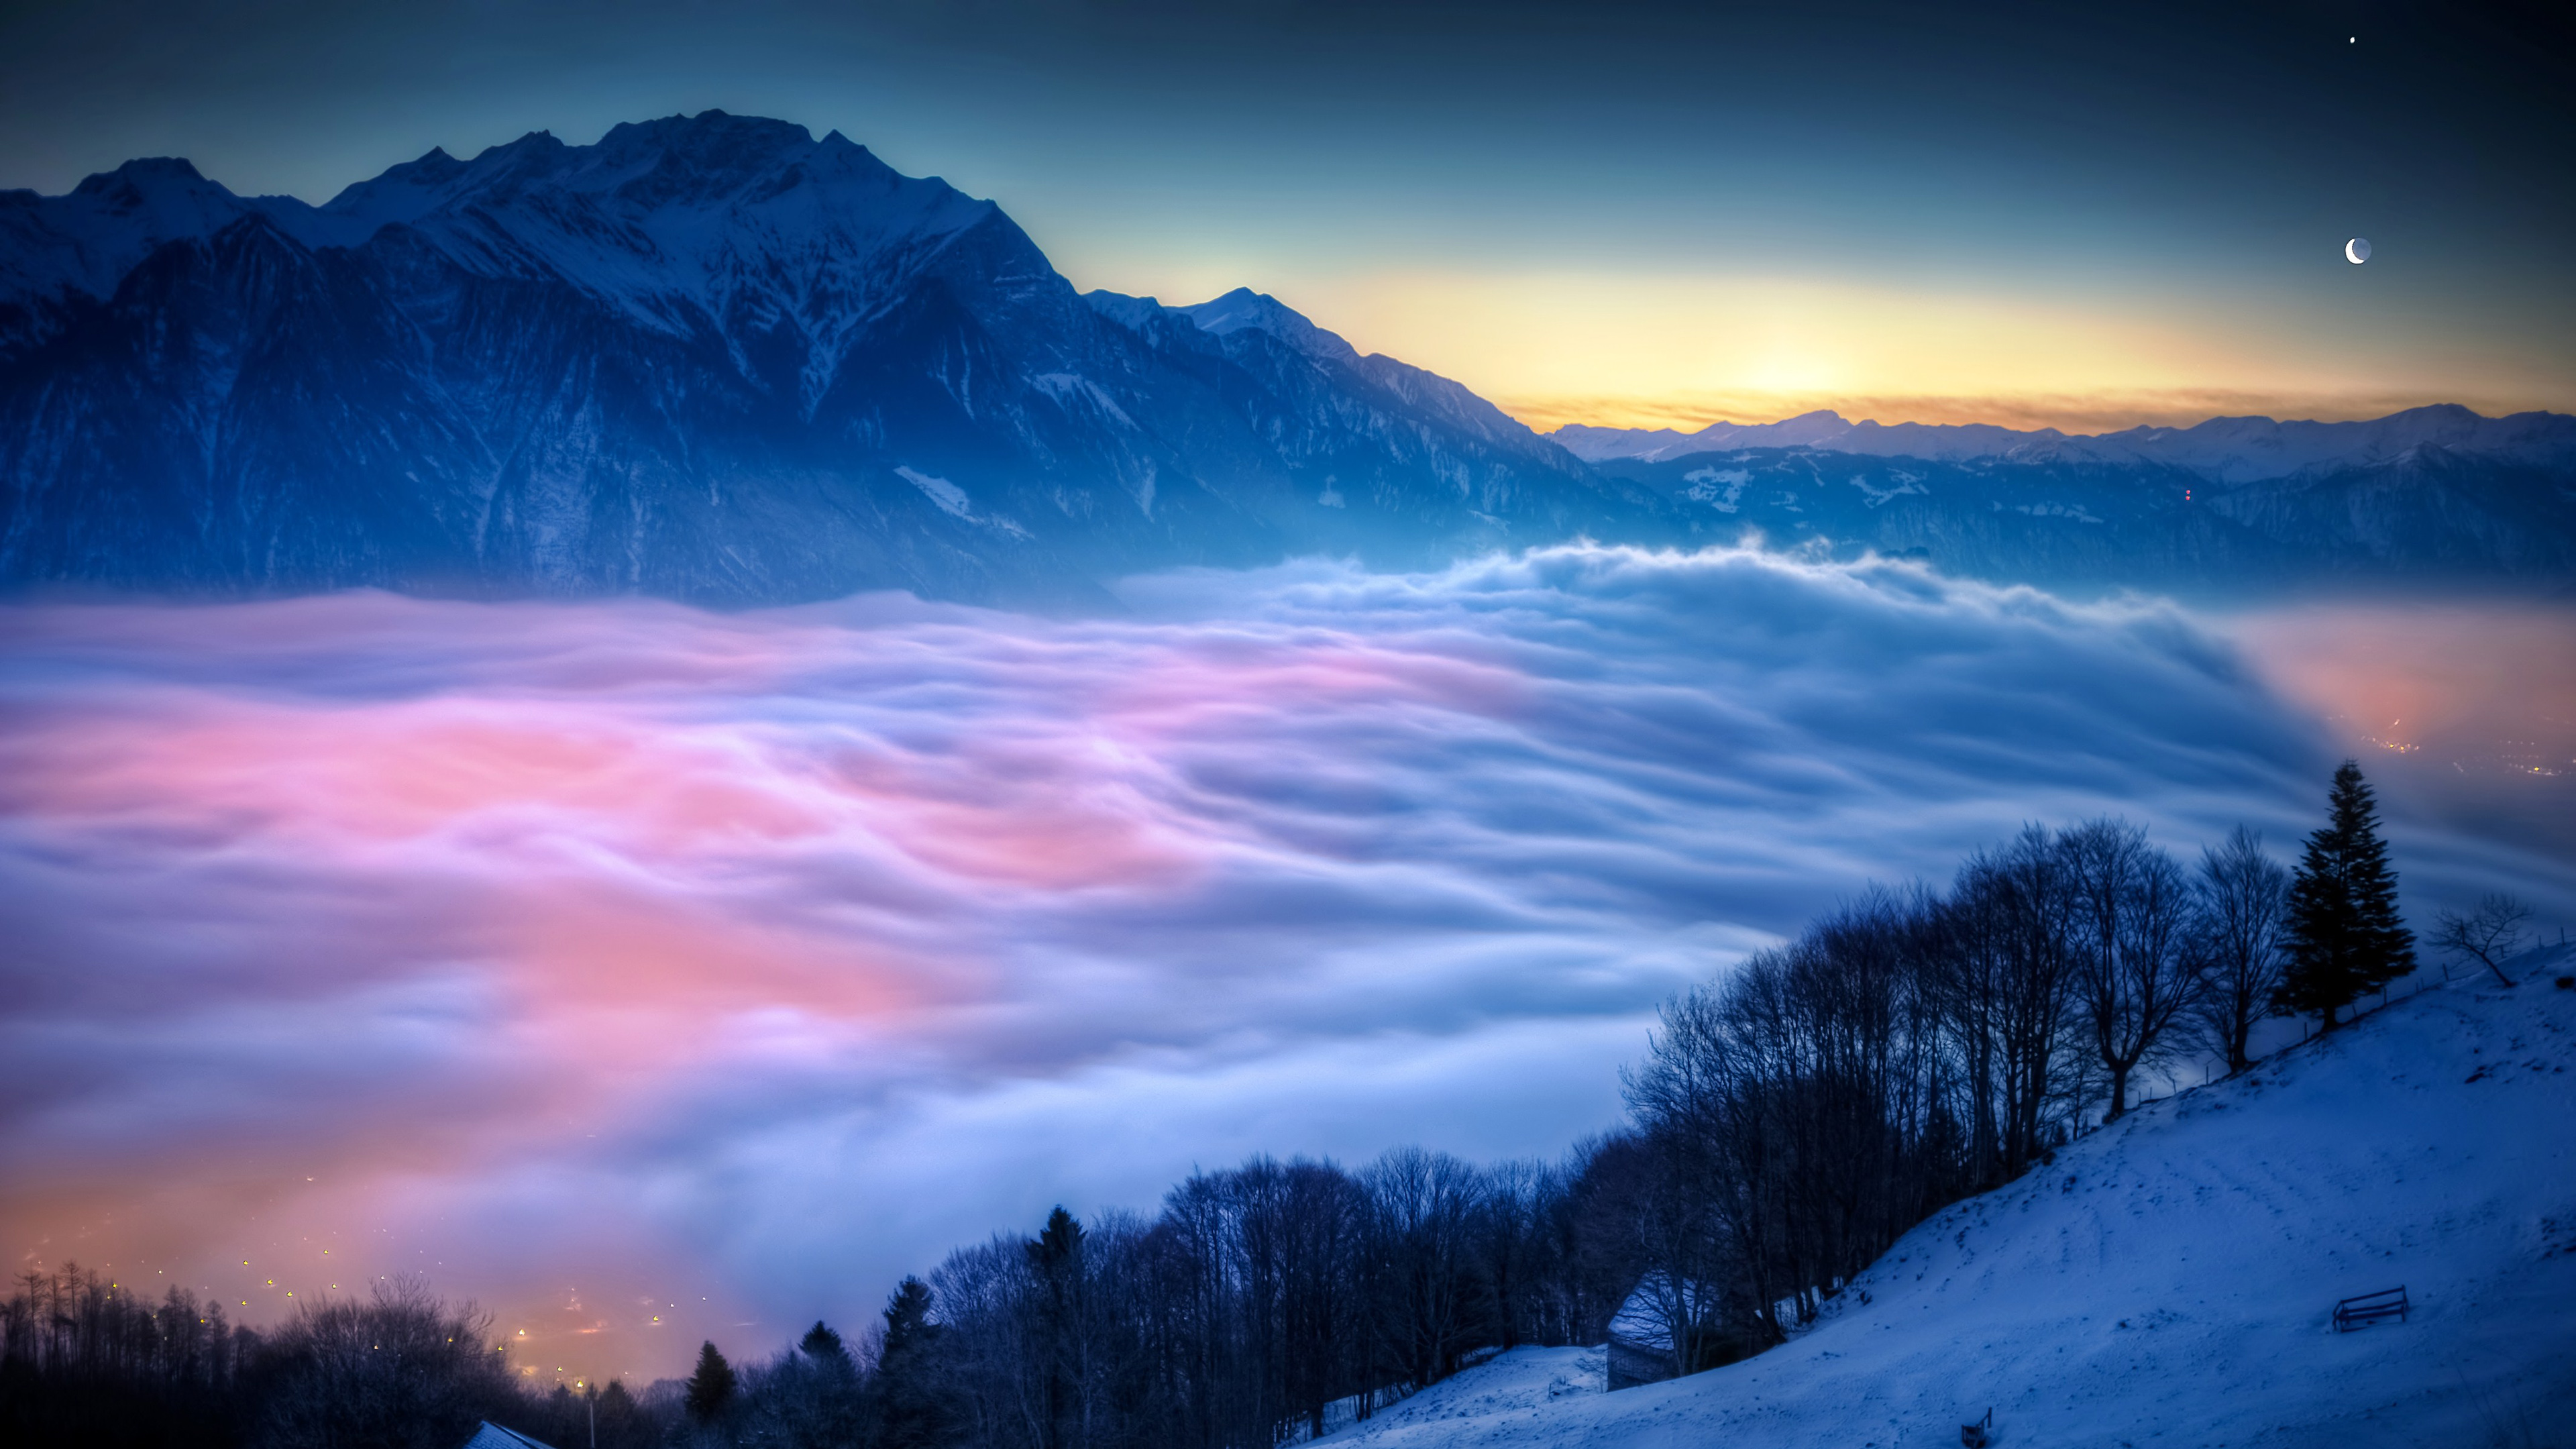  Mountain  4k  Ultra HD Wallpaper  Background Image 